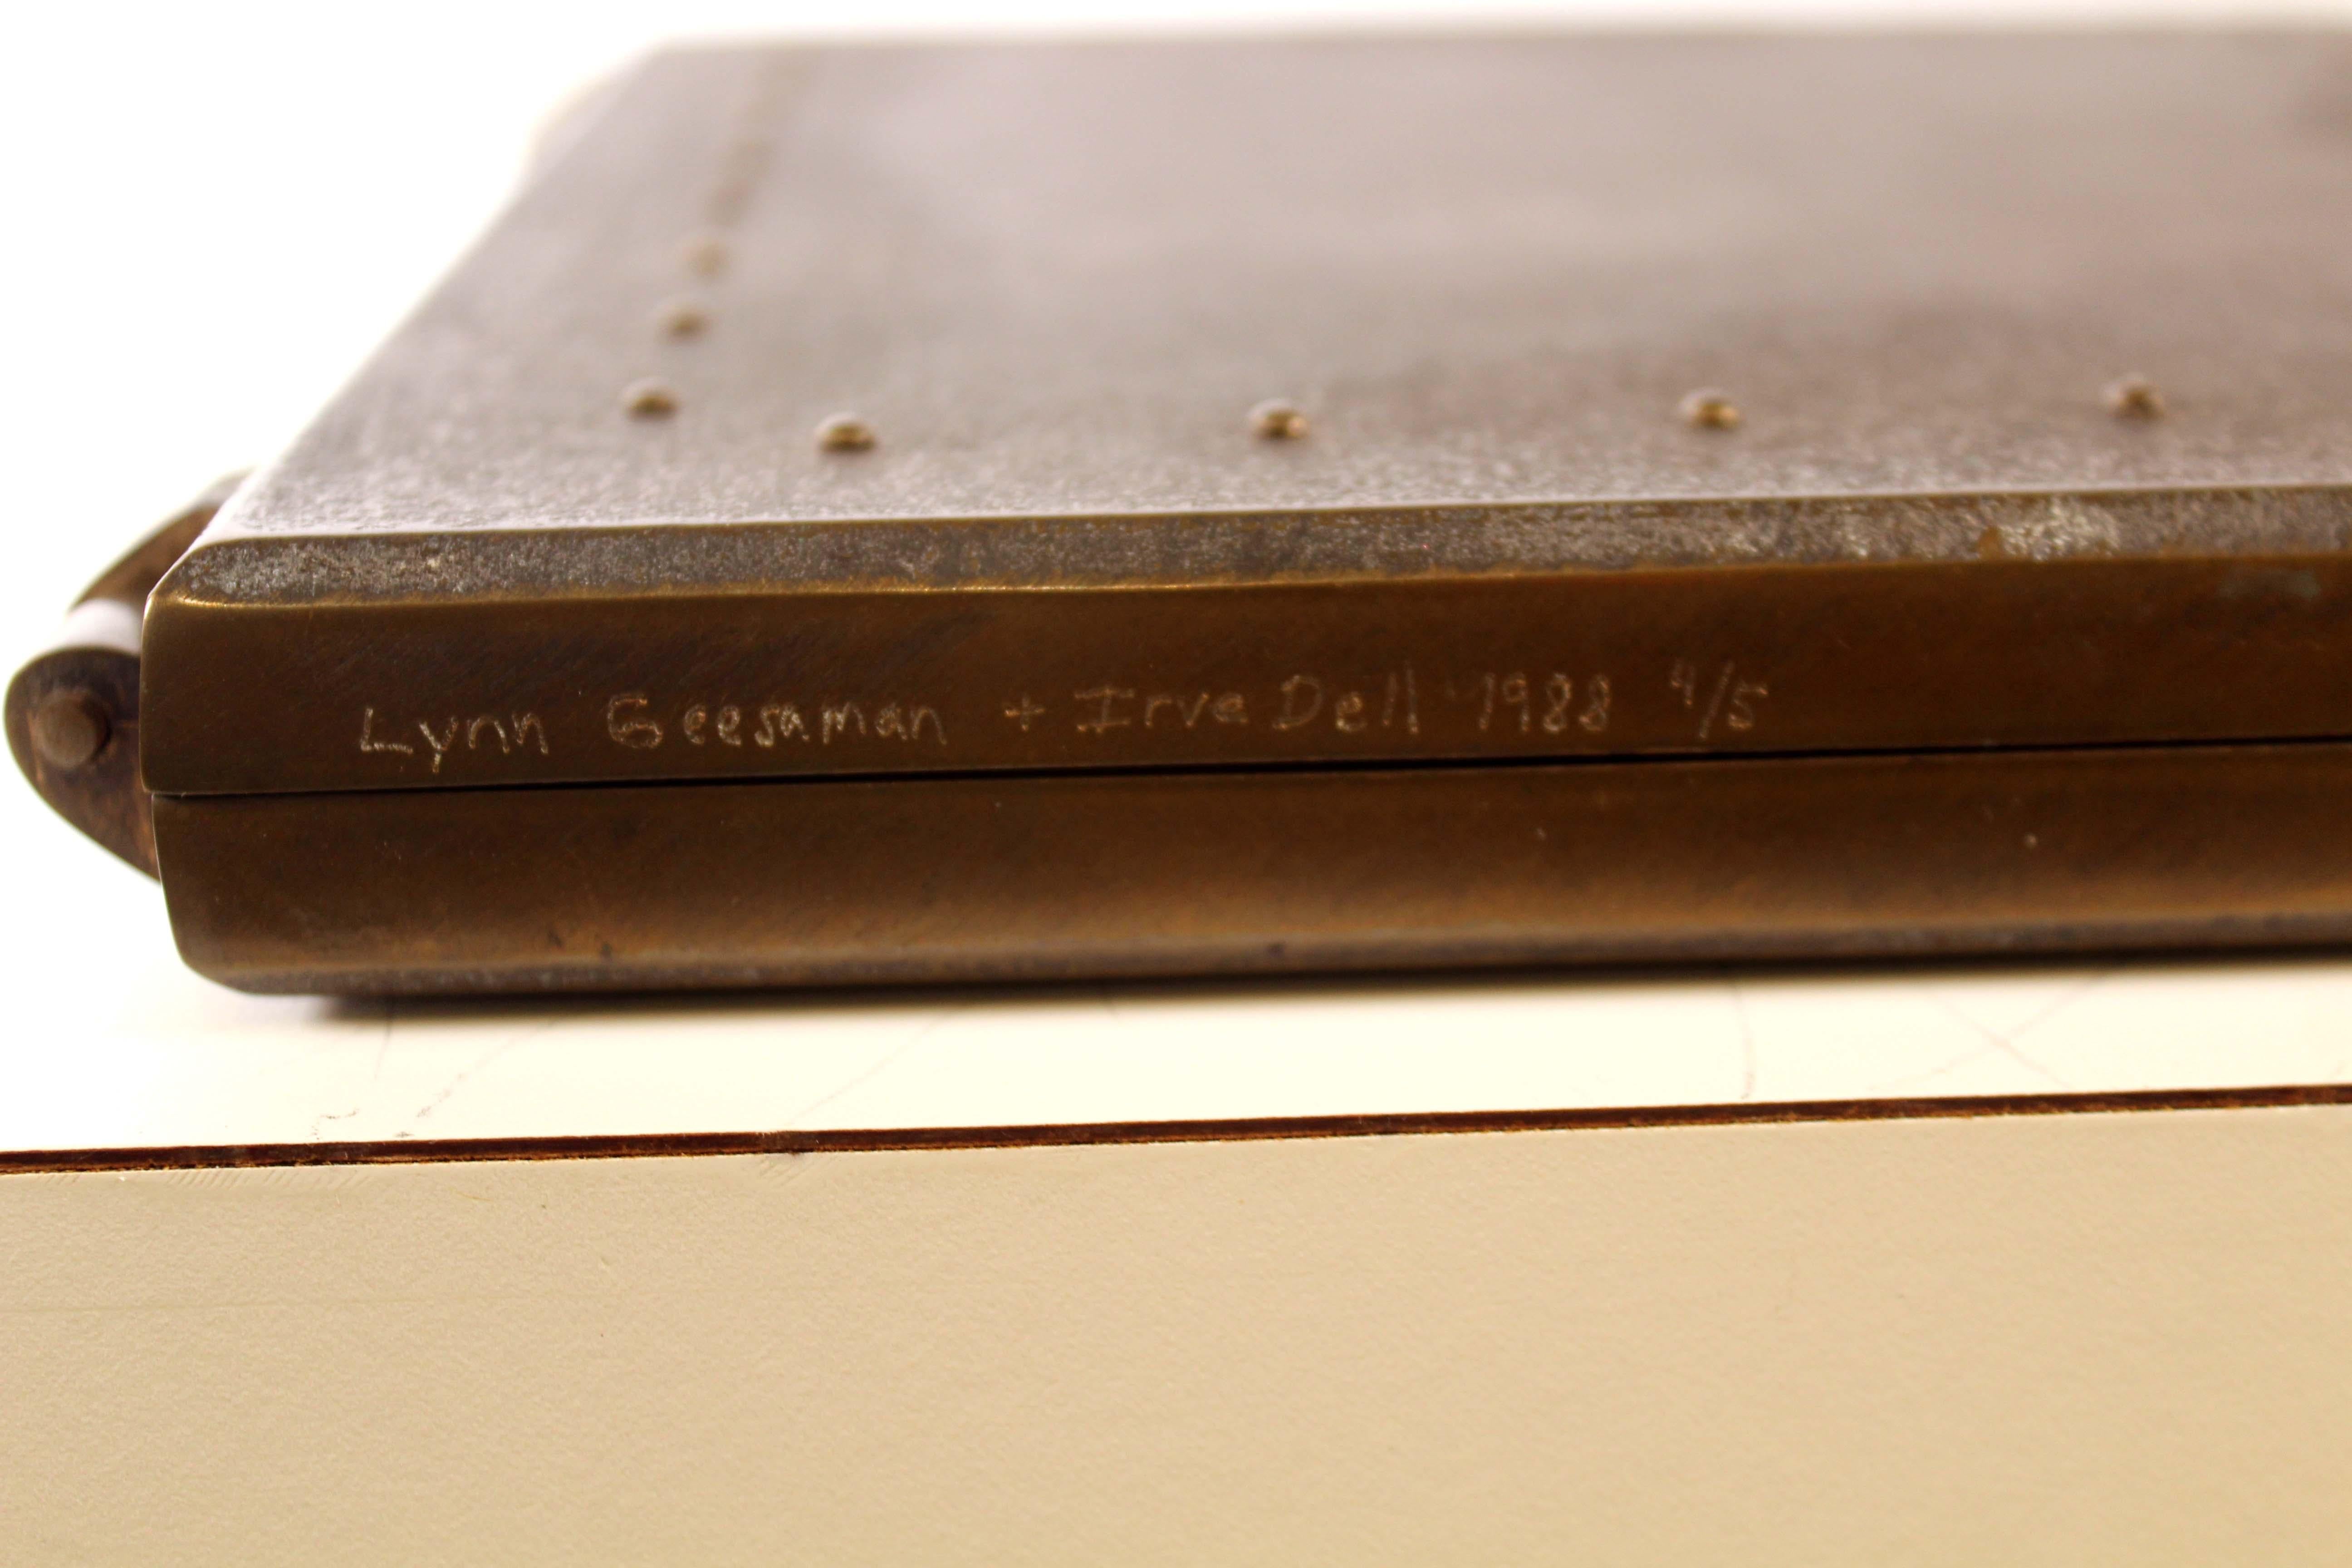 Lynn Gessaman & Irve Dell Bronze Sculpture Box with Gelatin Silver Prints 1986 For Sale 14